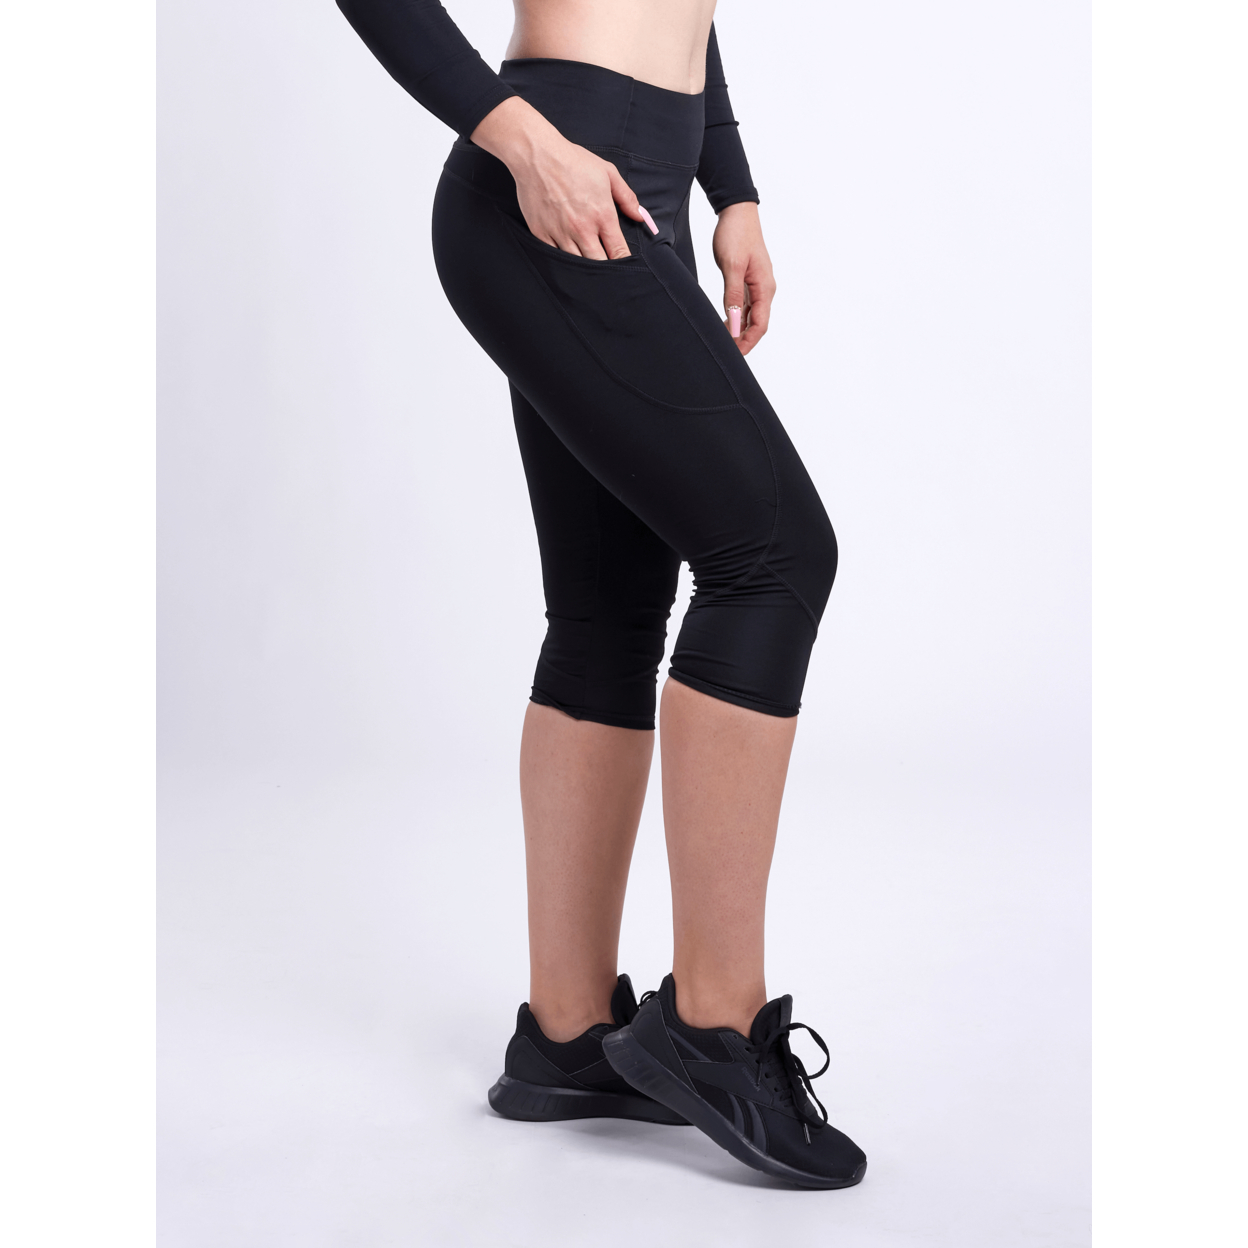 Mid-Rise Capri Fitness Leggings With Side Pockets - Black, Small / Medium